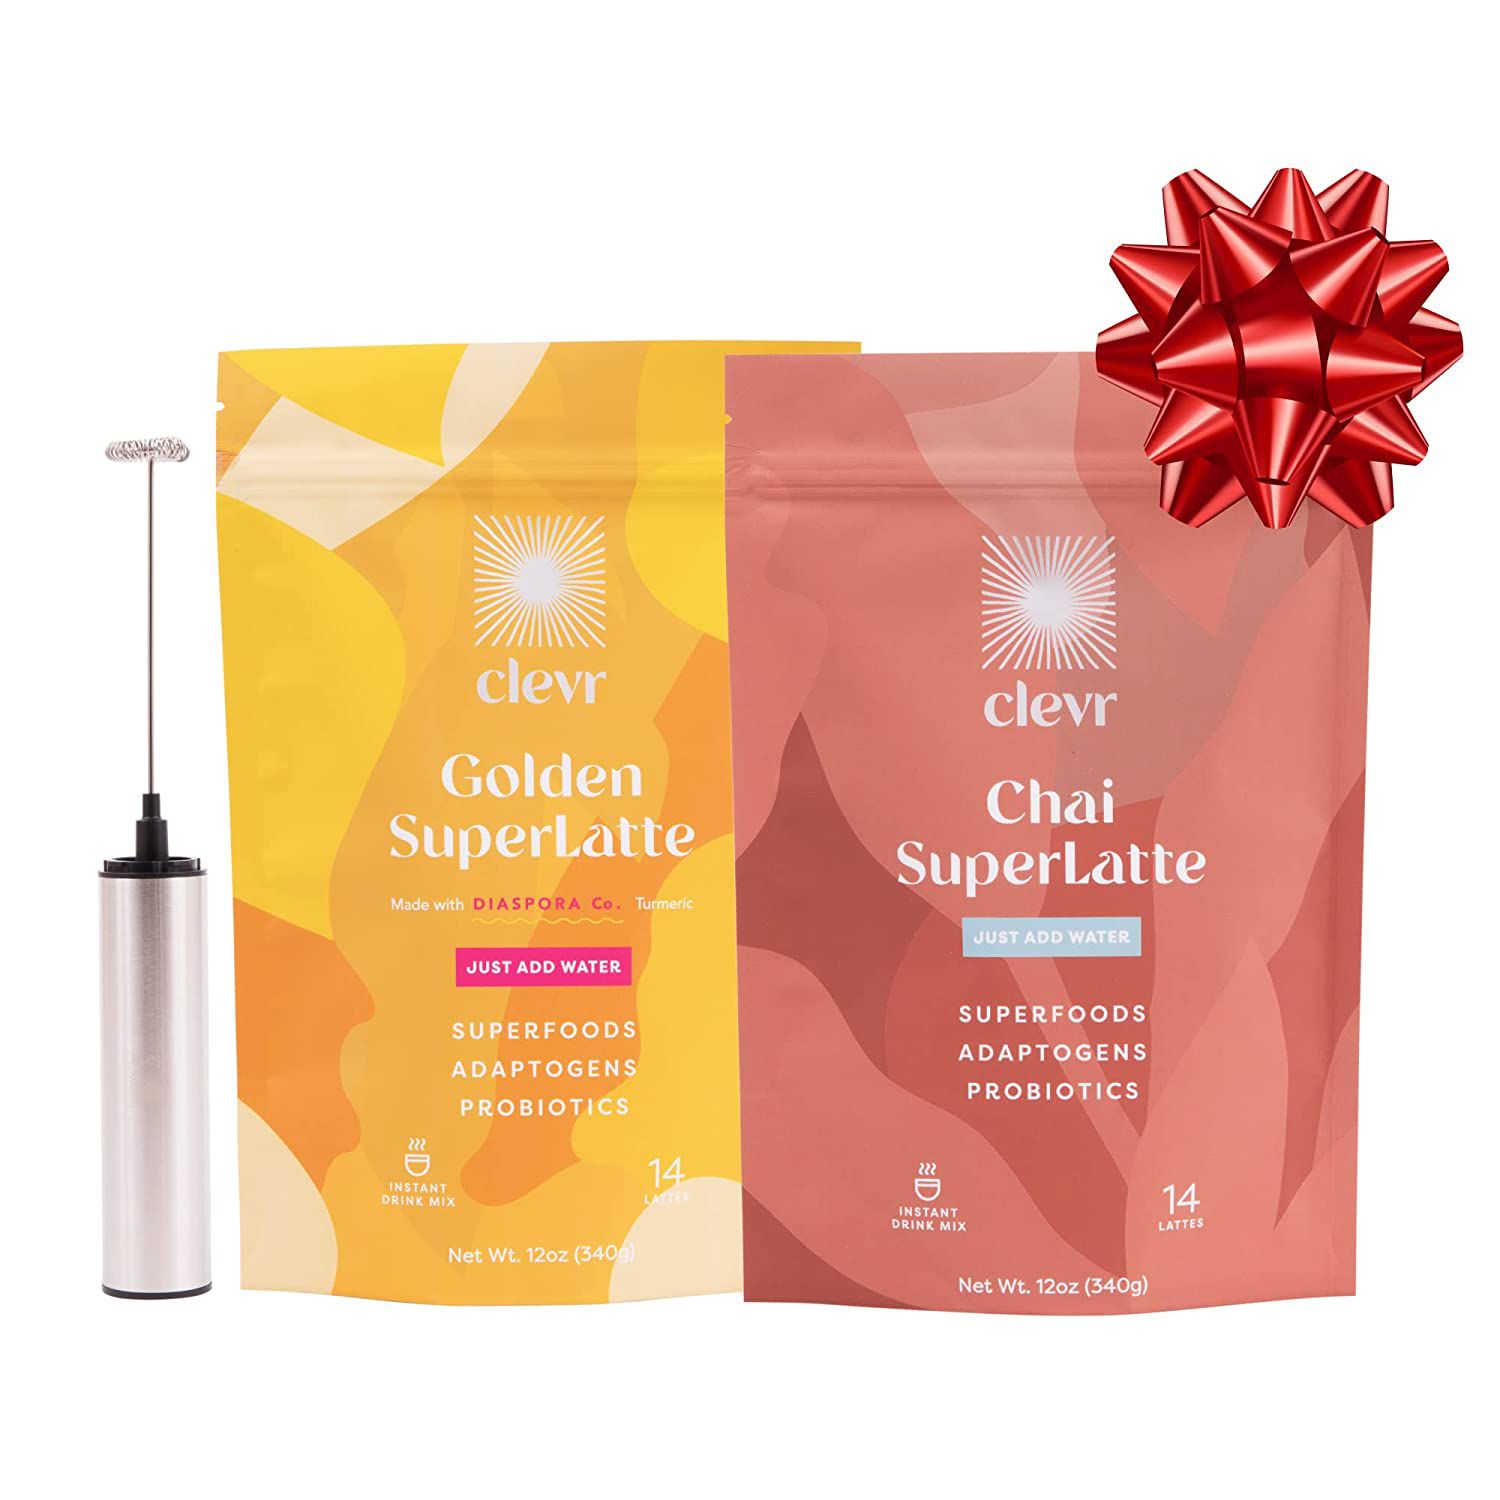 Golden SuperLatte and Chai SuperLatte bags on a white background